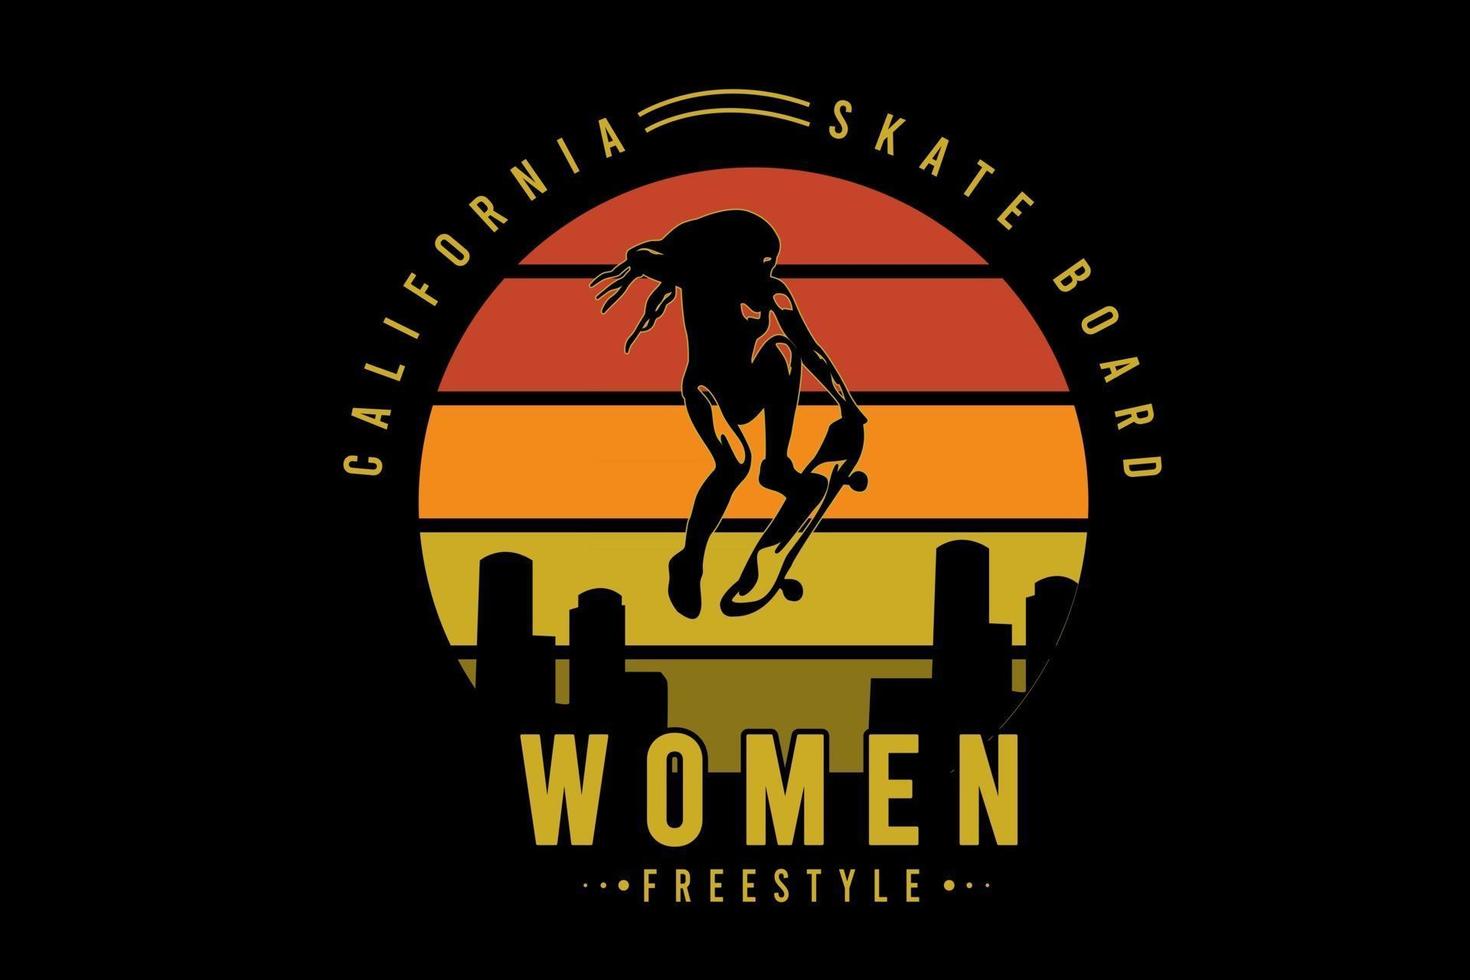 california skate board women freestyle color orange and yellow vector